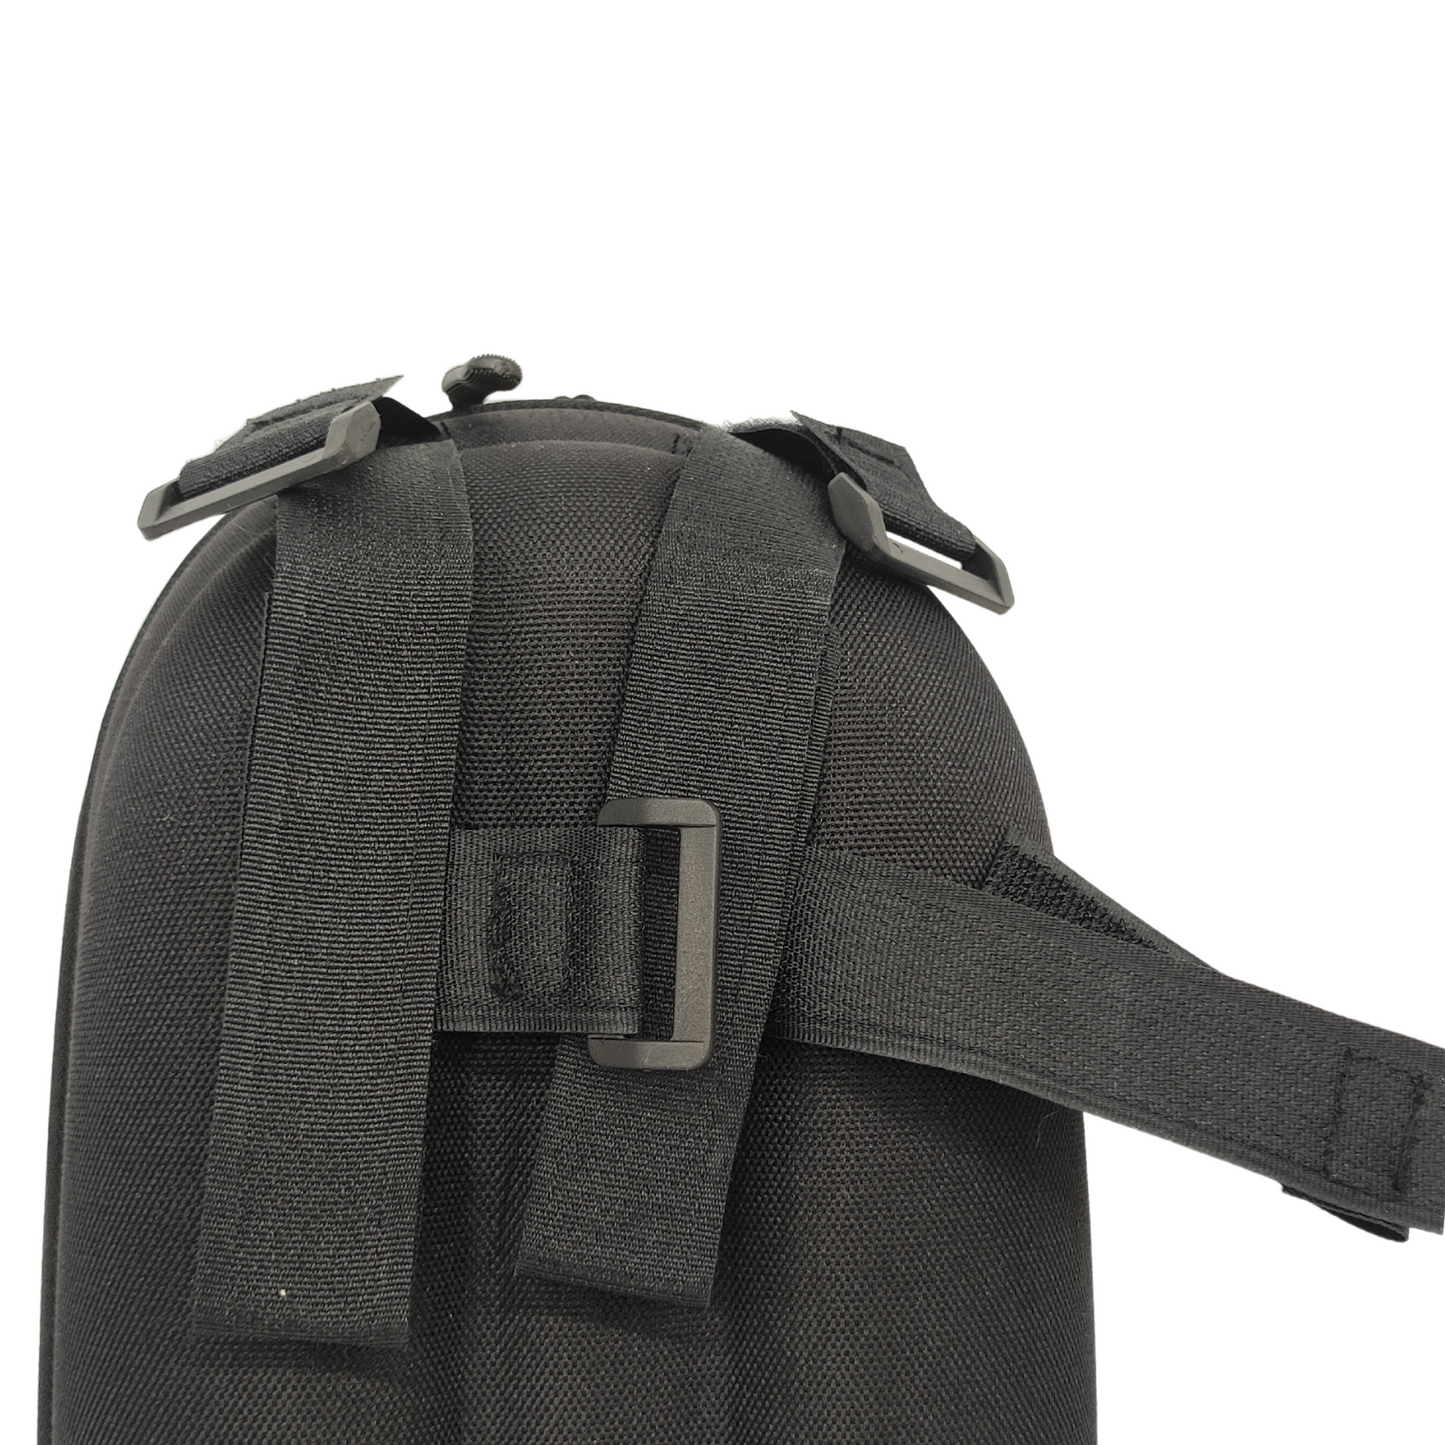 E-Scooter Bag Handlebar 3L Universal for Ninebot Xiaomi SoFlow